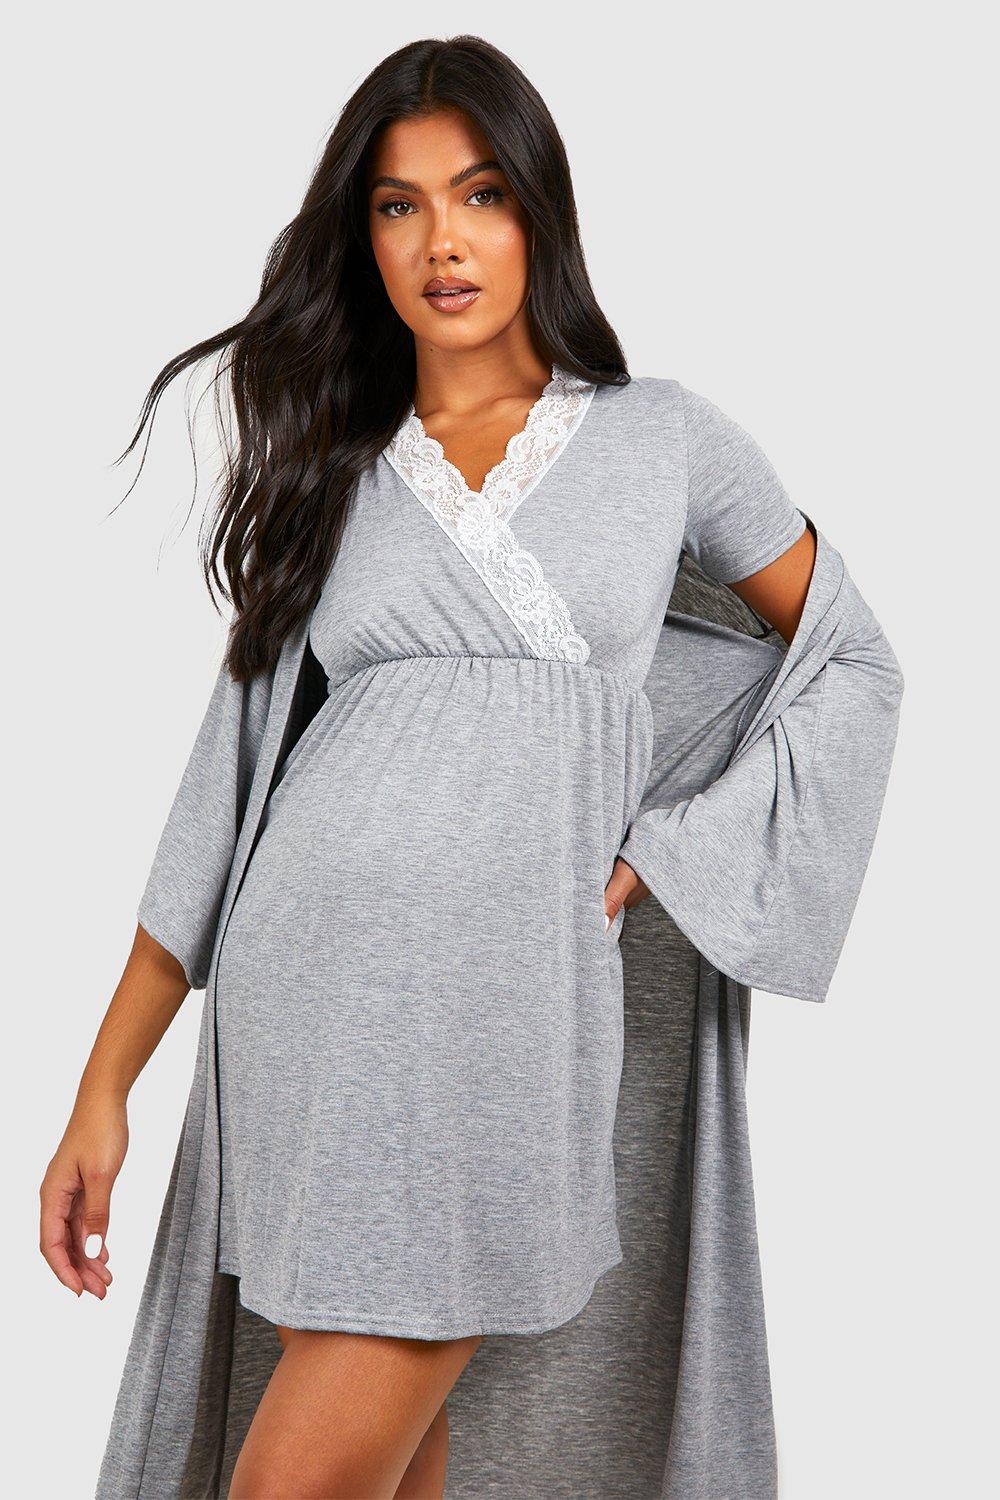 OYOANGLE Women's Maternity Nursing Nightgown and Robe Set 2 Piece